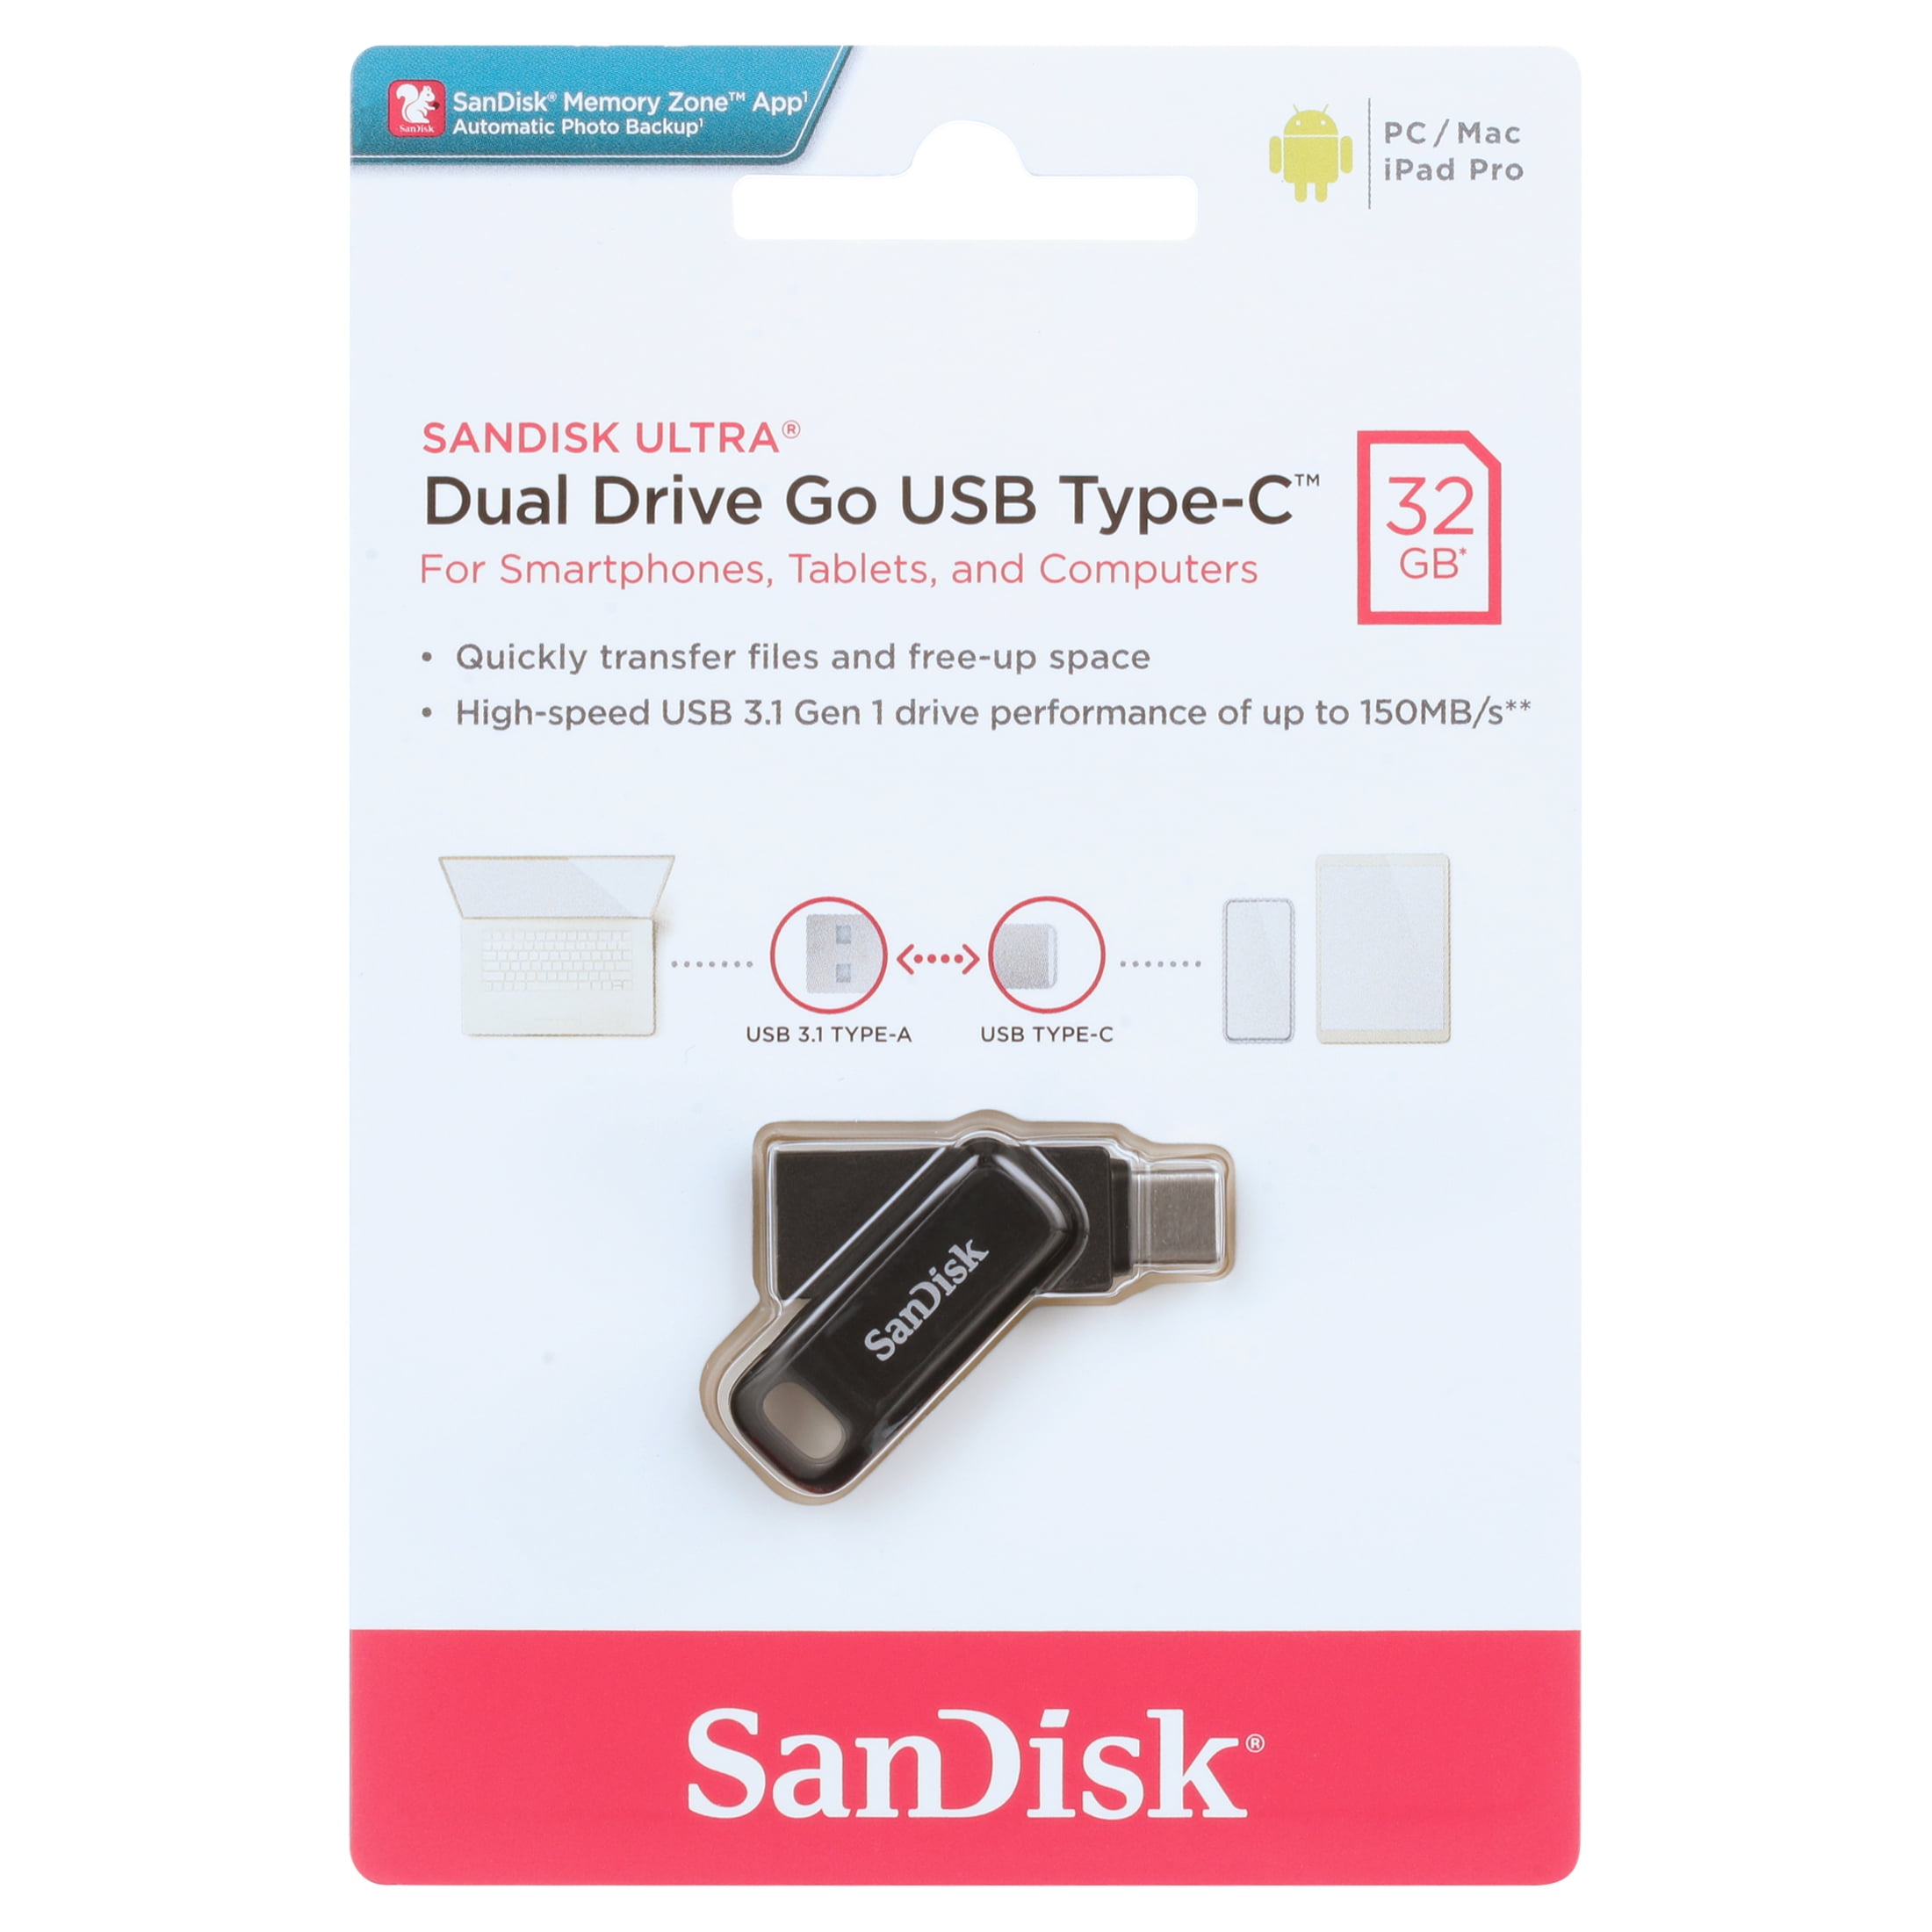 møbel Vie erindringsmønter SanDisk 32GB Ultra Dual Drive Go USB Type C - SDDDC3-032G-AW46 - Walmart.com